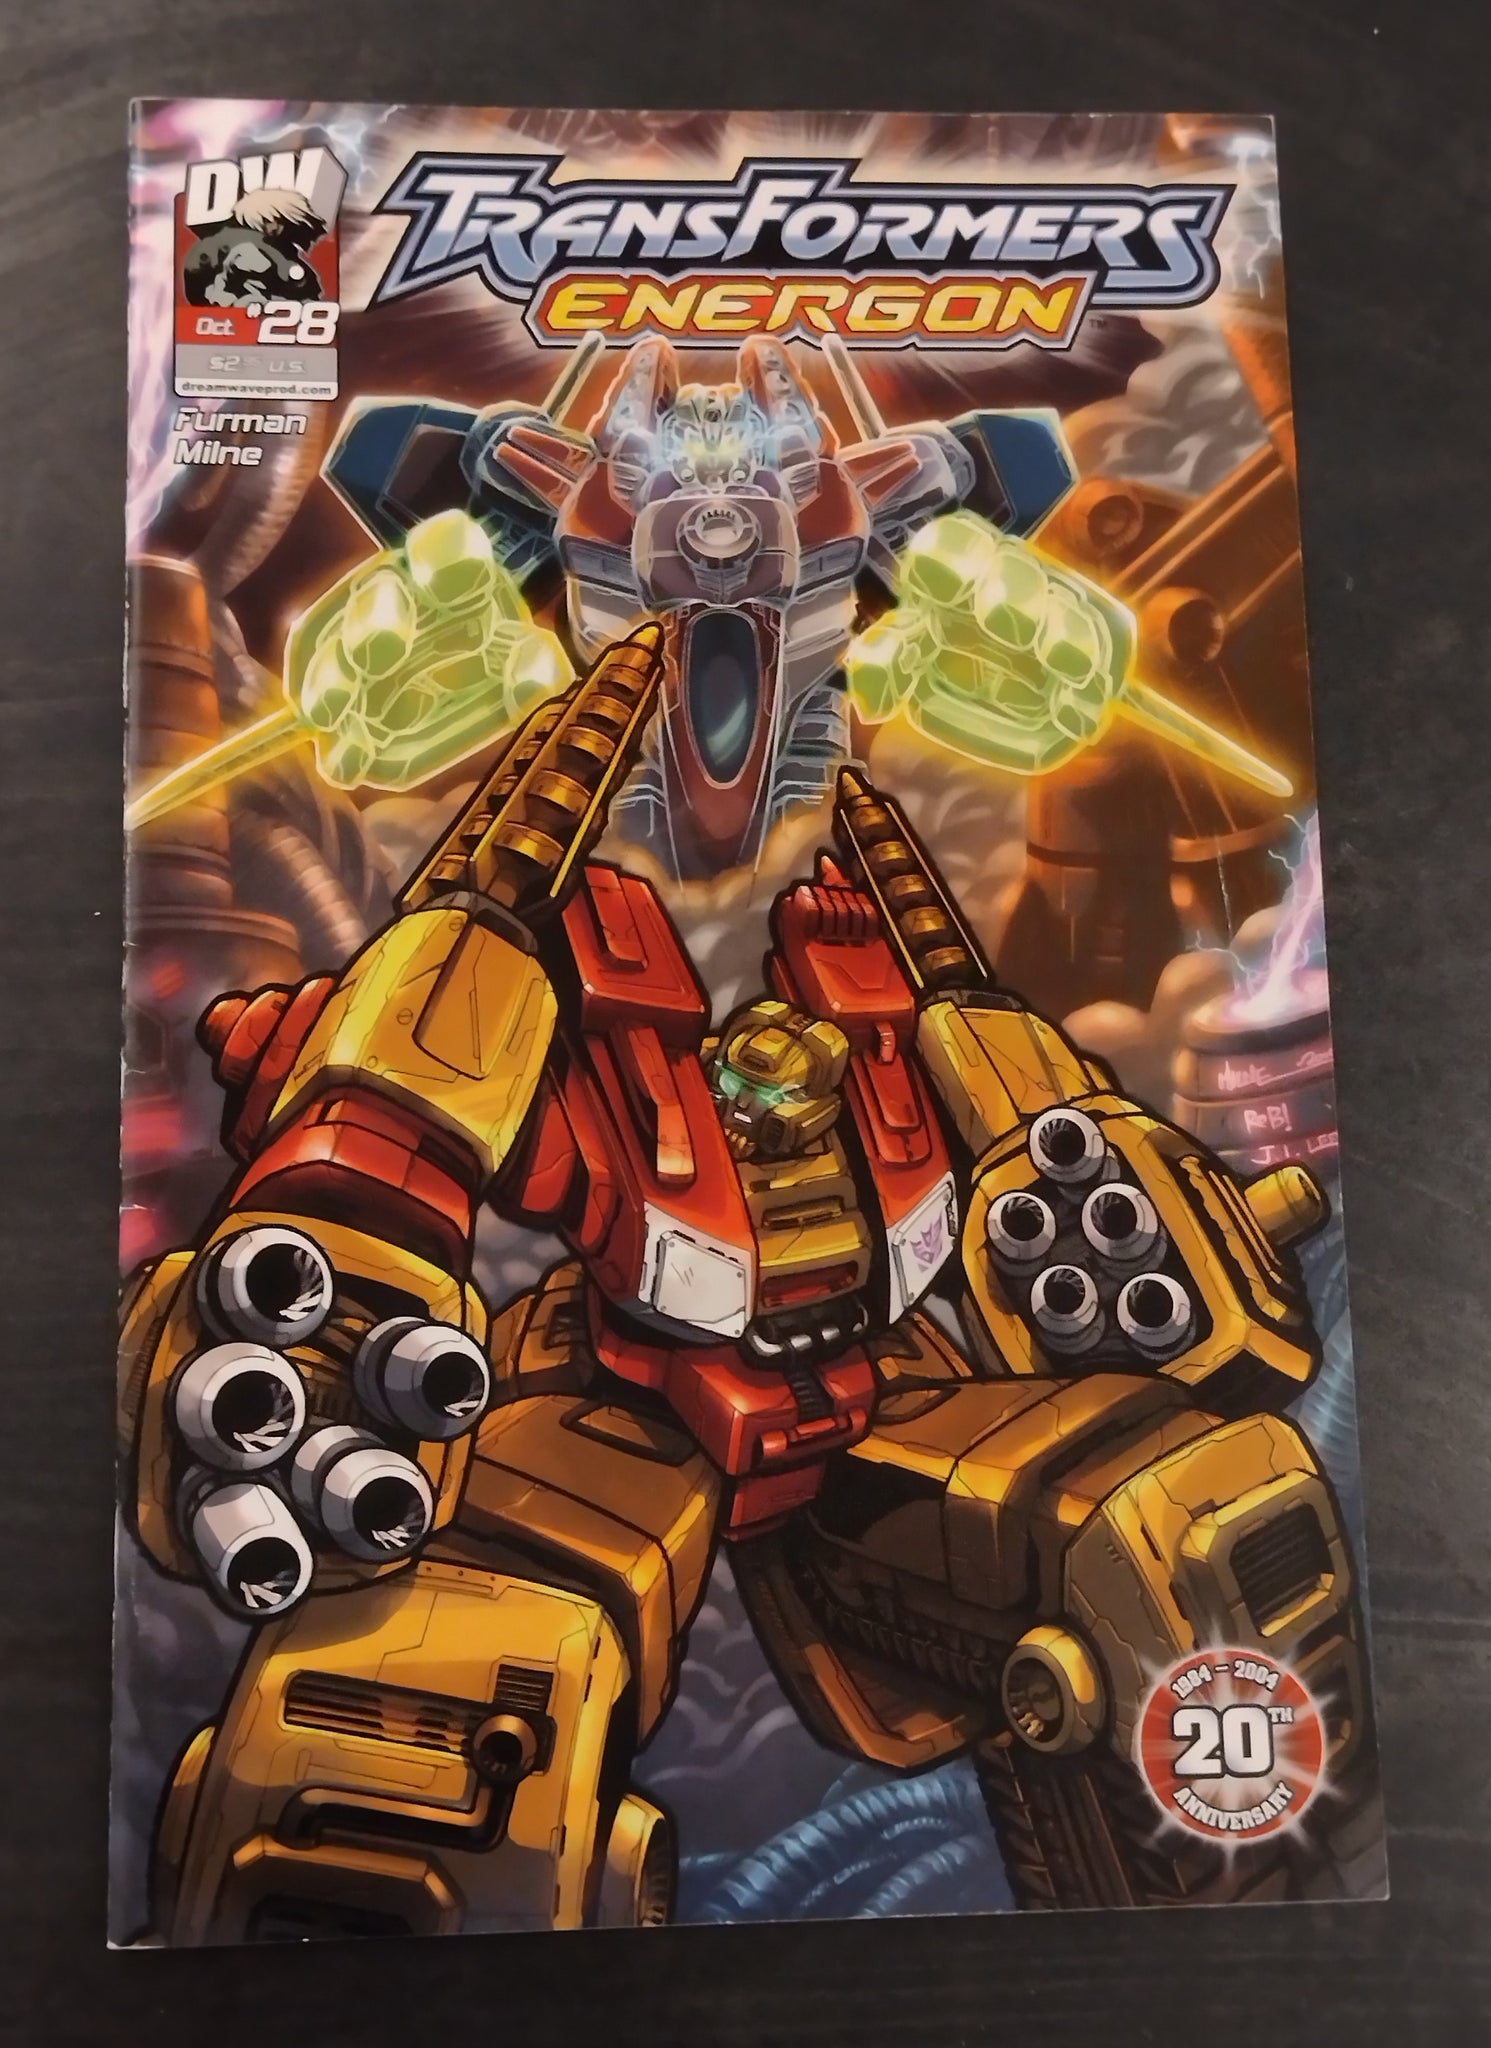 Transformers Energon #28 FN